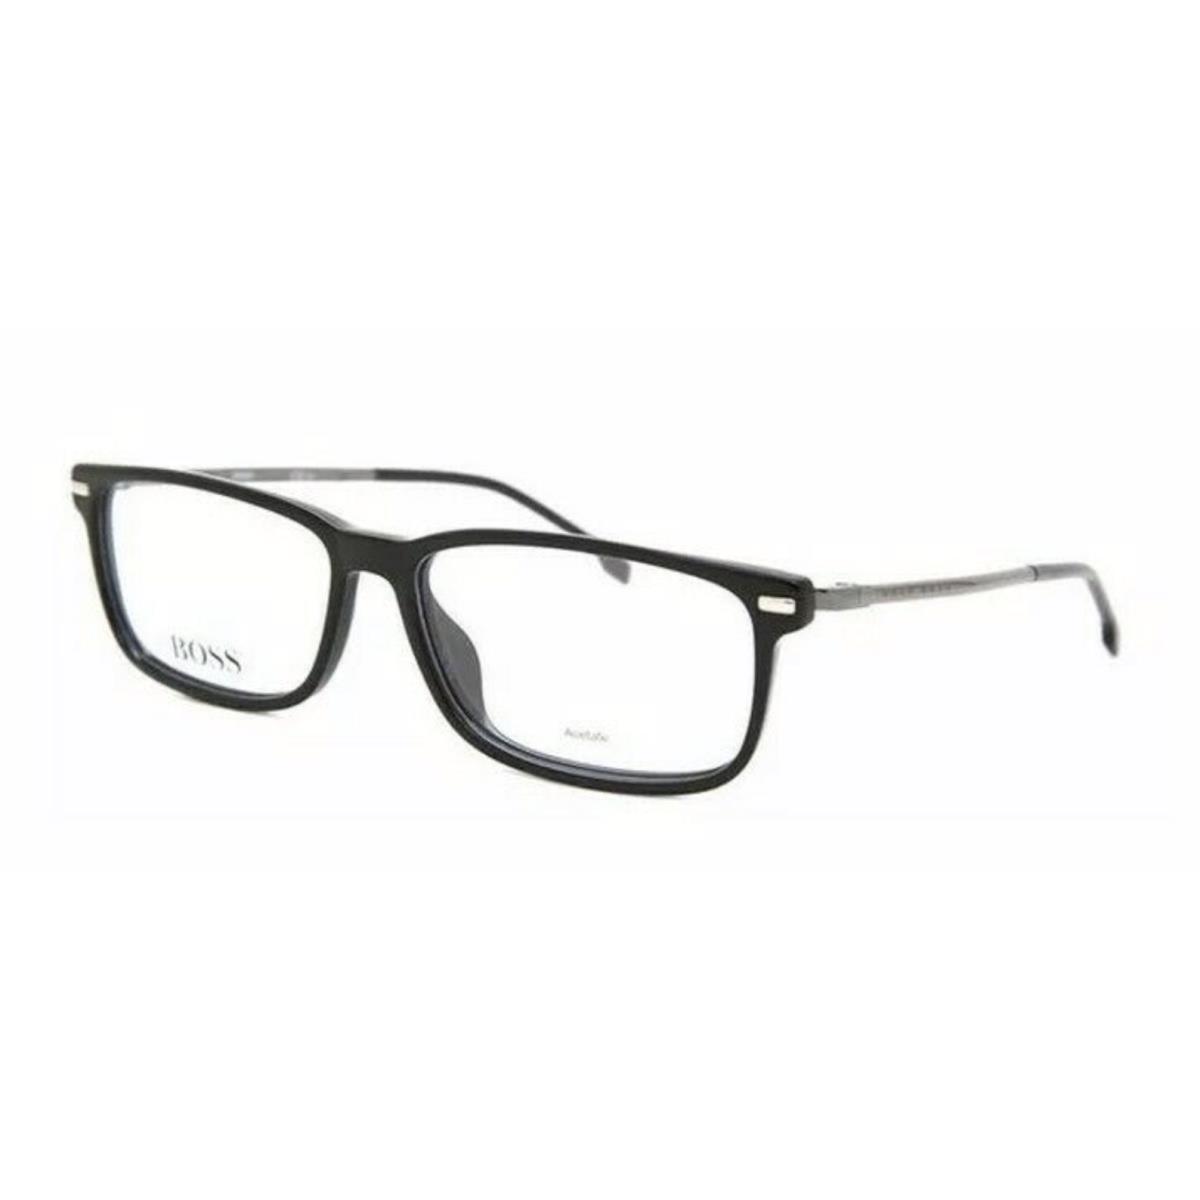 Hugo Boss Rx-able Eyeglasses Boss 0933 807 55-15 Shiny Black Silver Frames